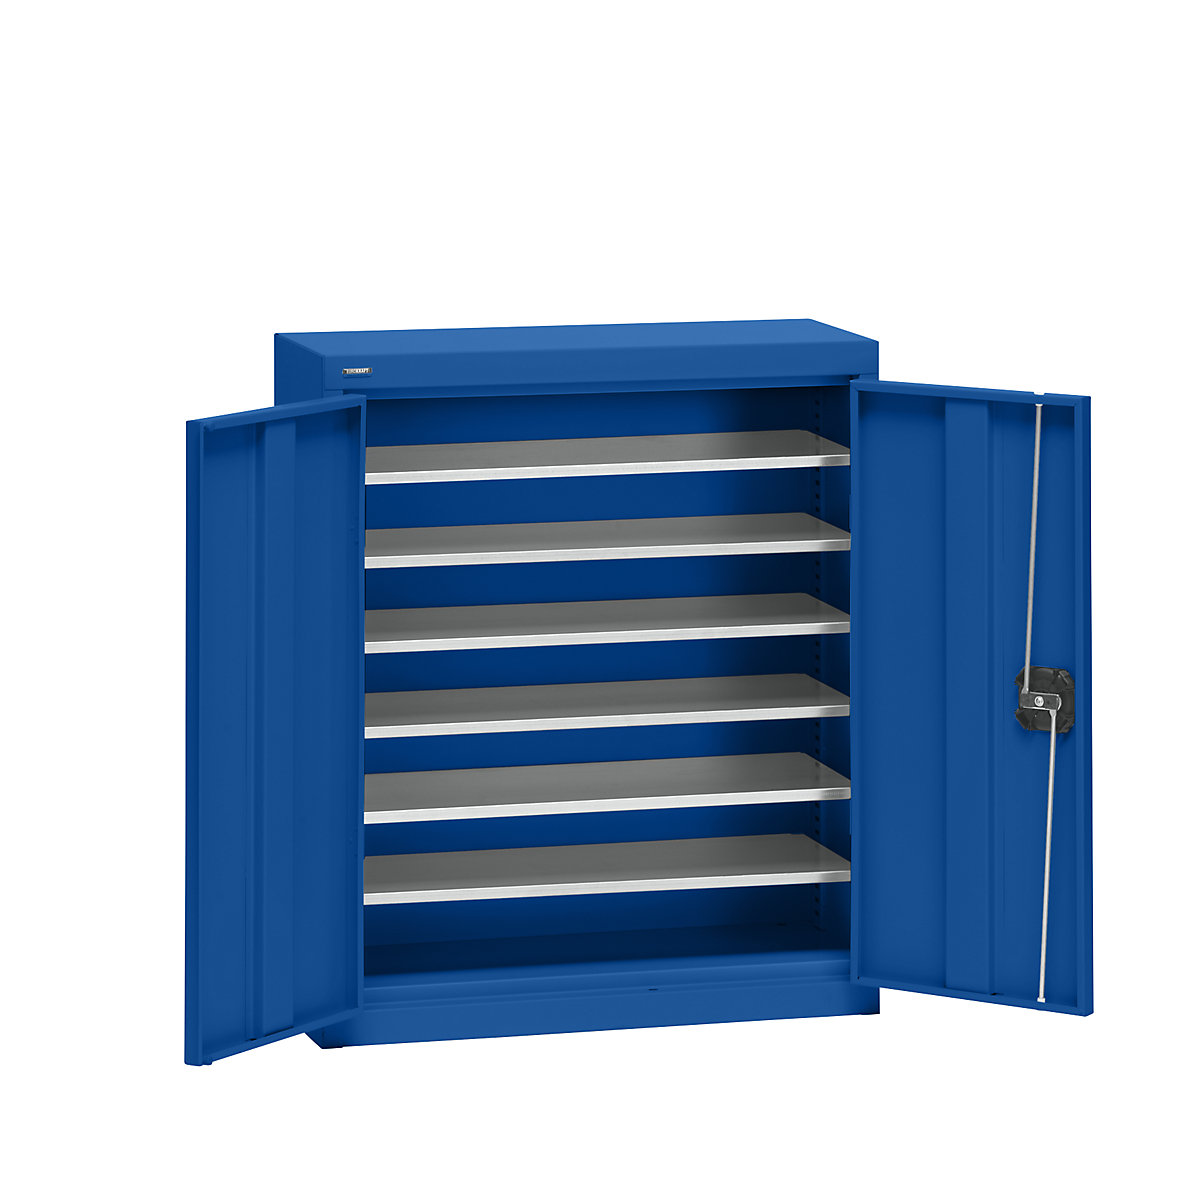 Storage cupboard made of sheet steel – eurokraft pro, height 780 mm, gentian blue RAL 5010, 6 shelves-4